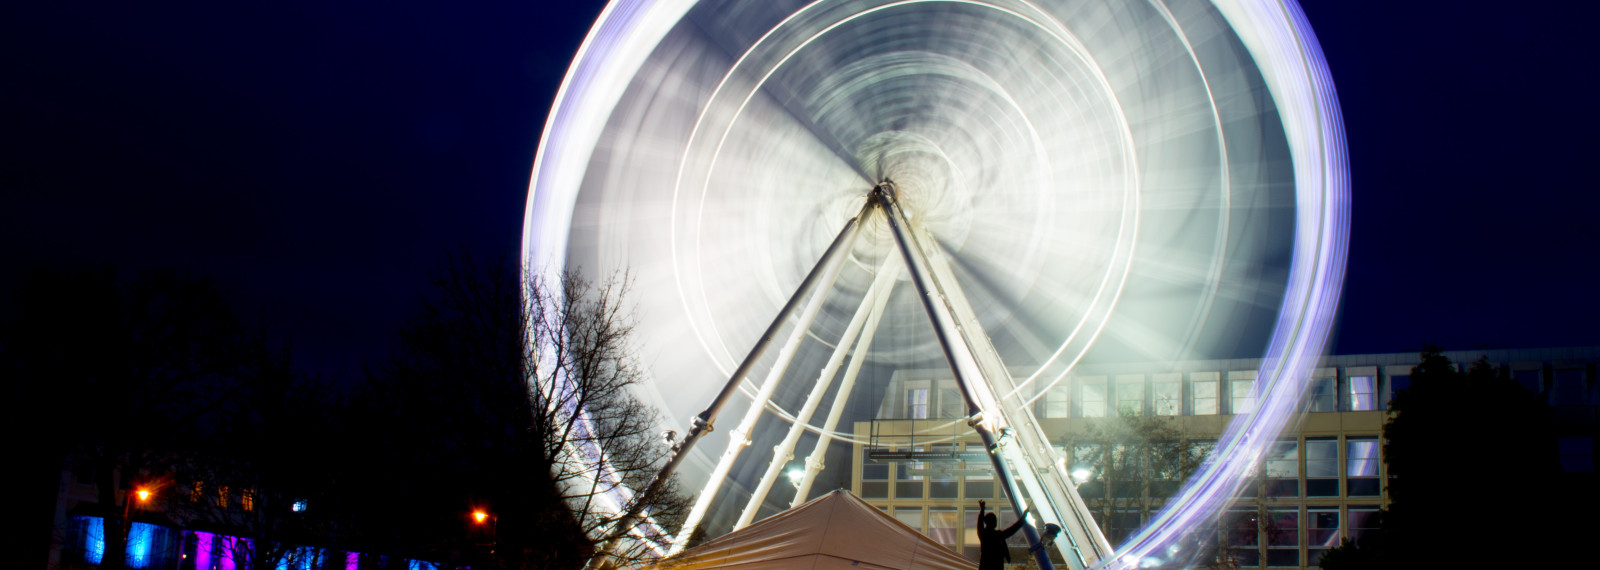 Image of an illuminated Ferris wheel in a night scene